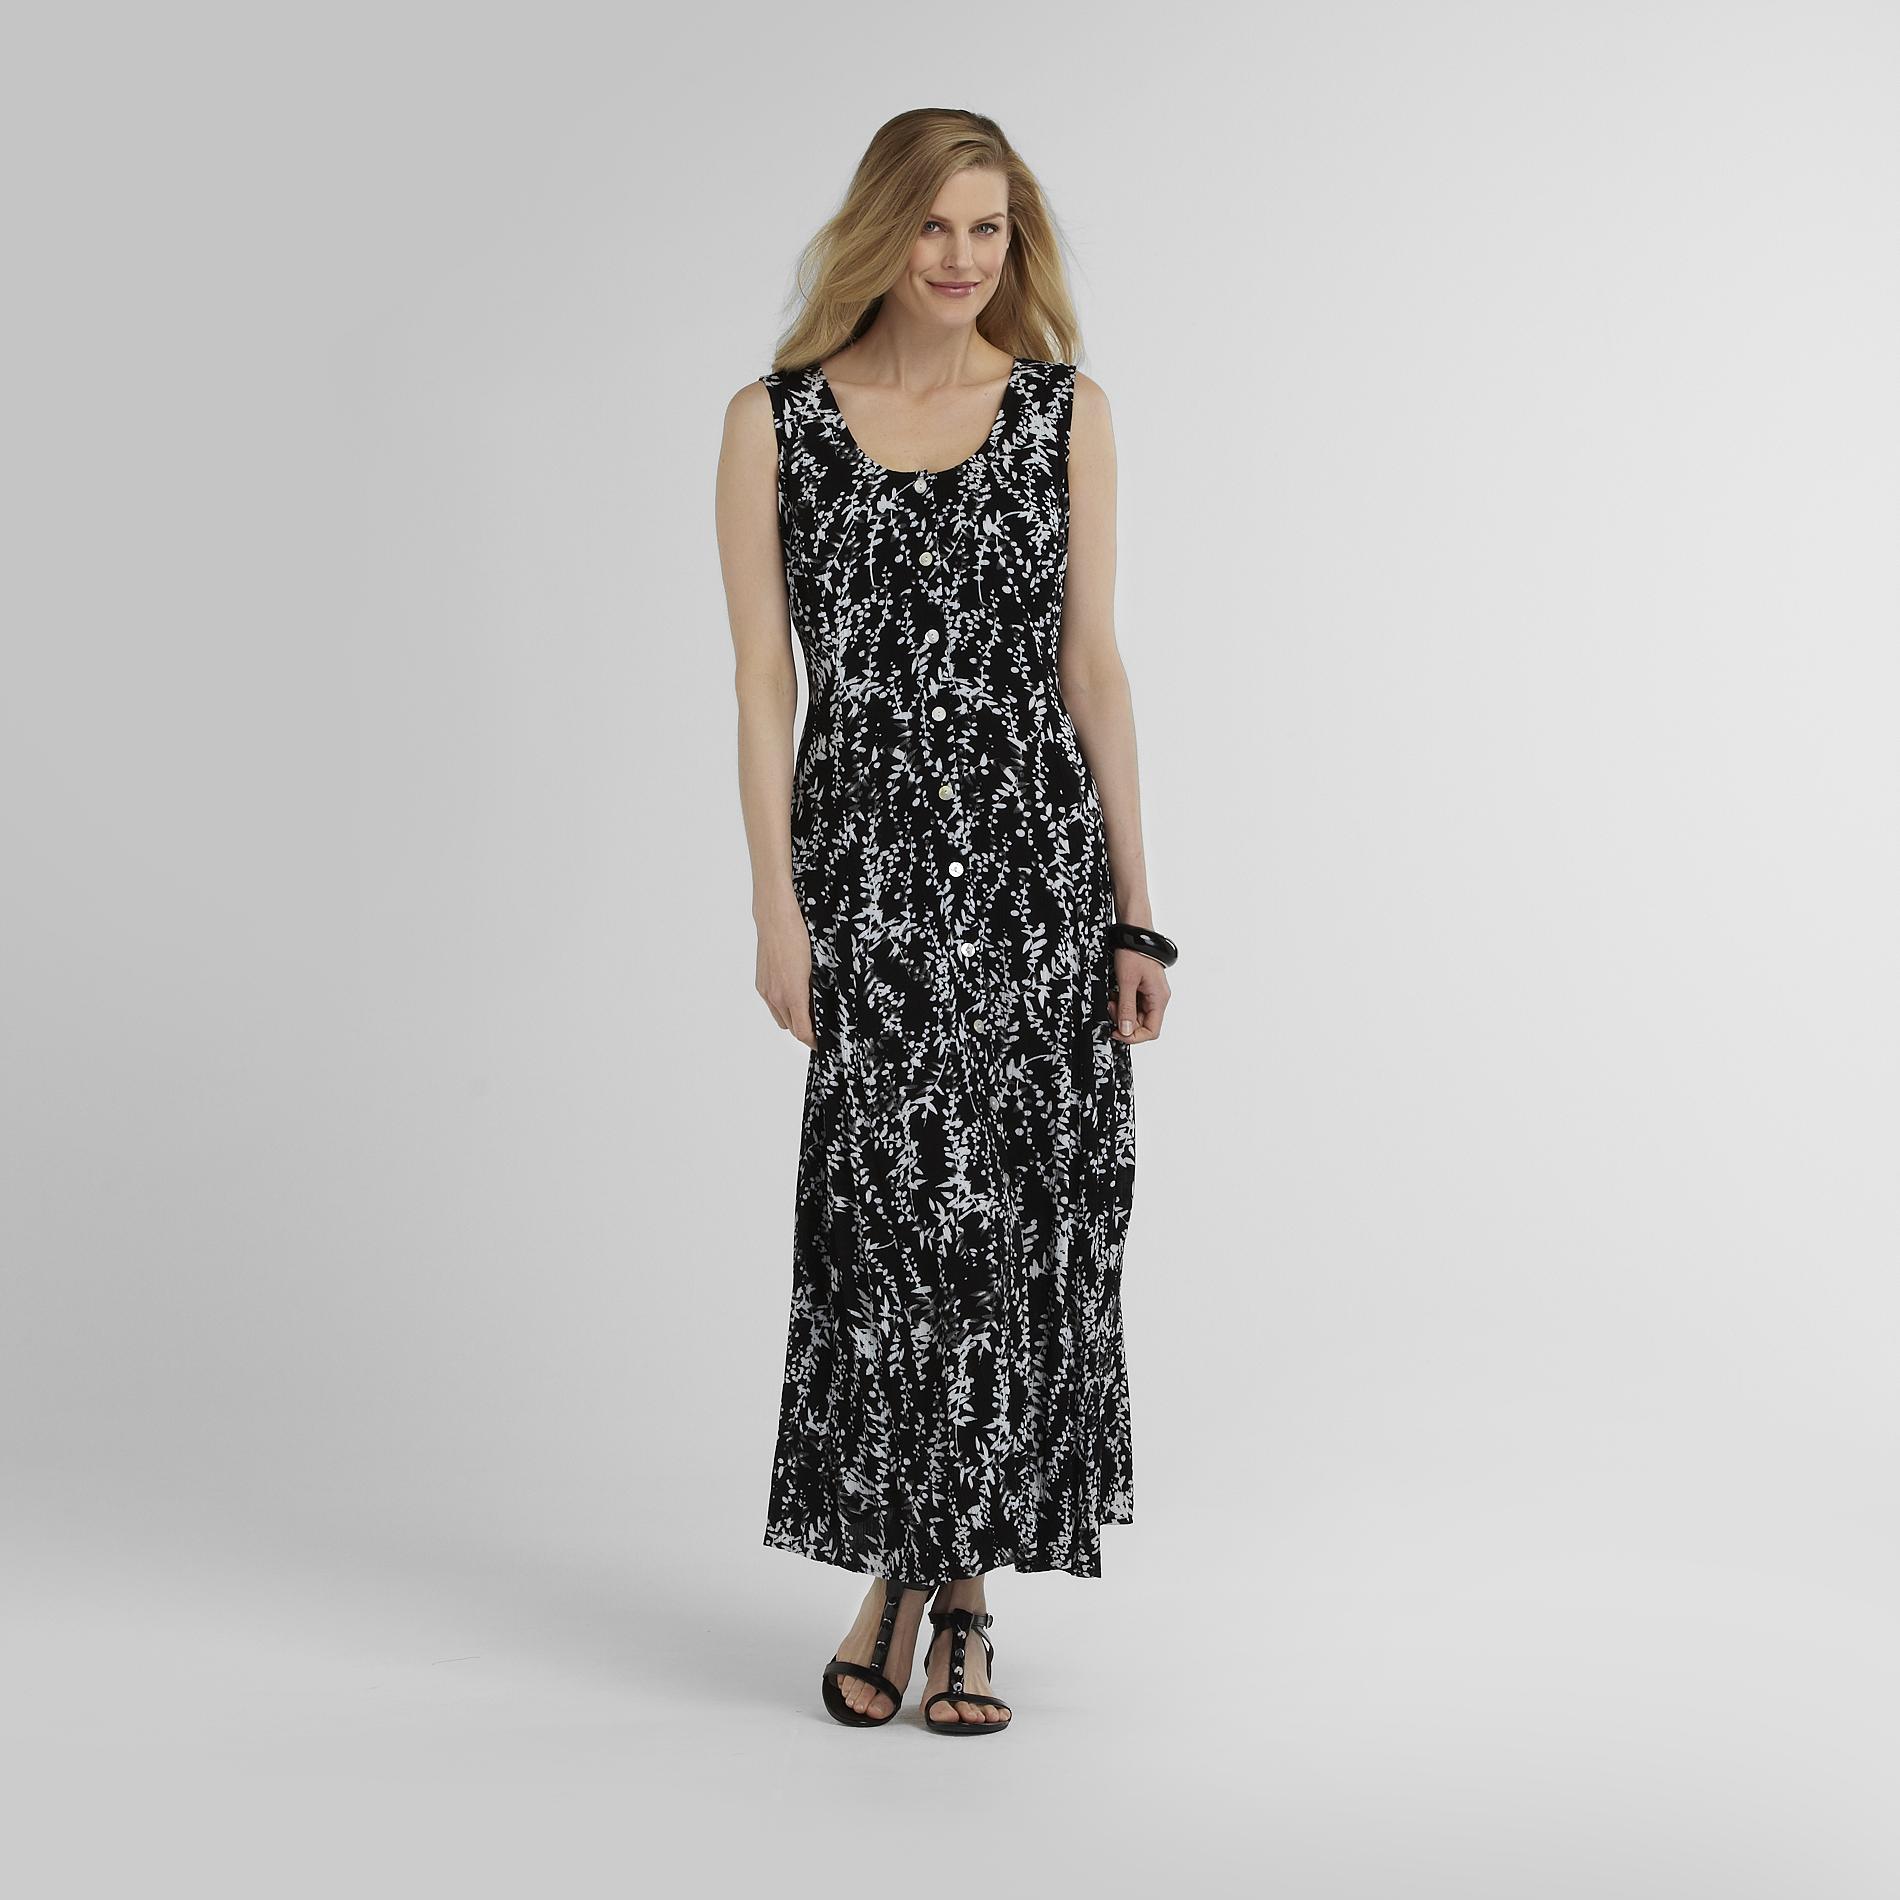 Ronni Nicole Women's Sleeveless Dress - Floral Print